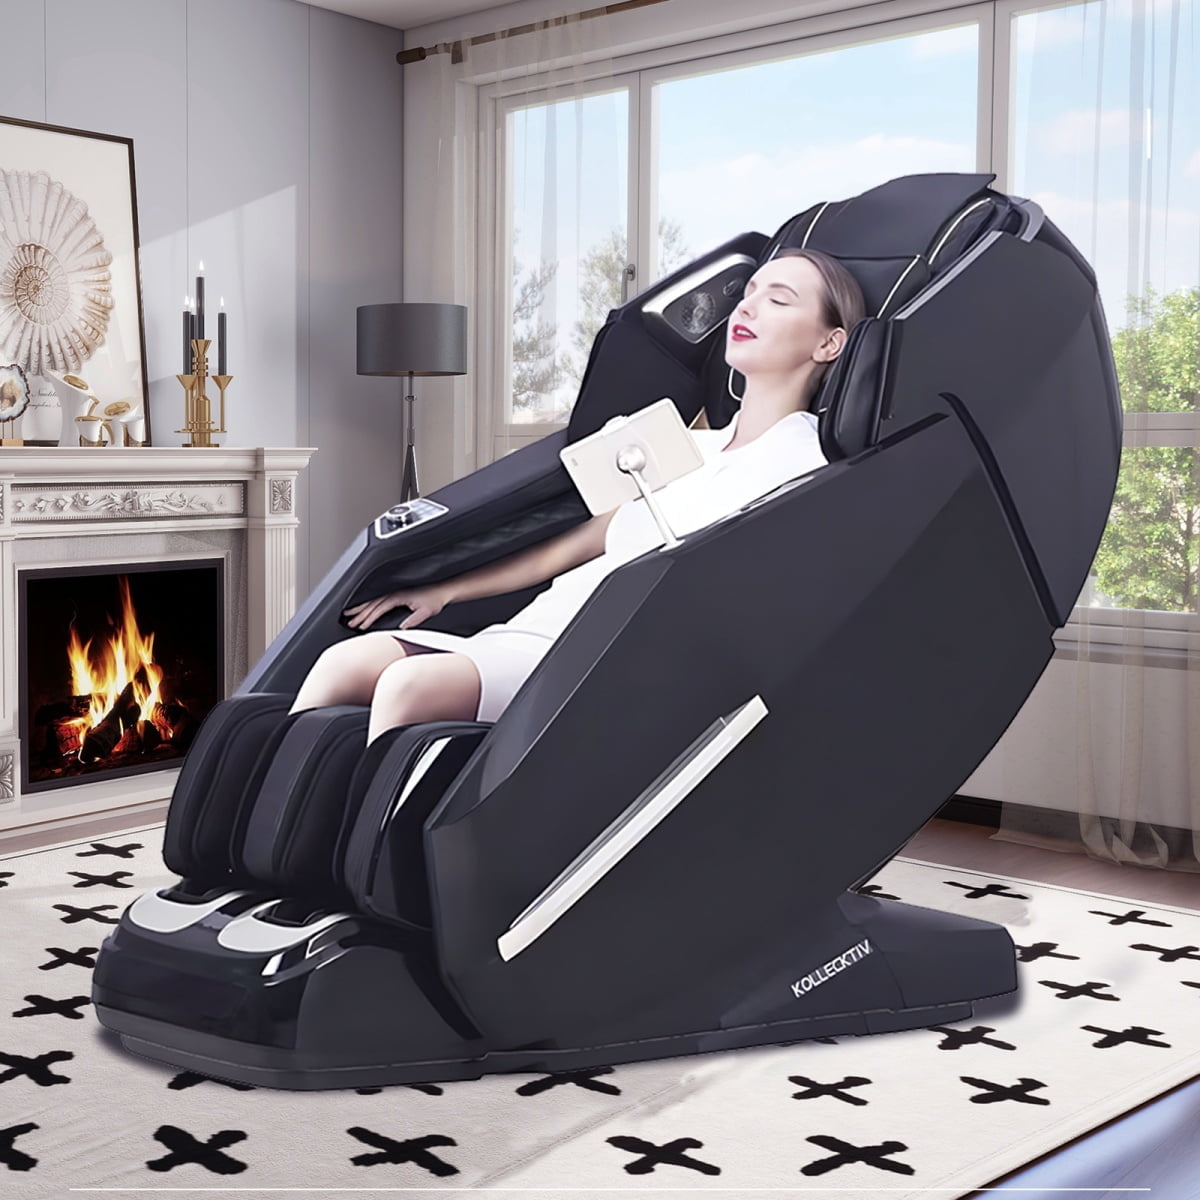 Kollecktiv 301 Luxury 4D+5D Massage Chair Full Body 59